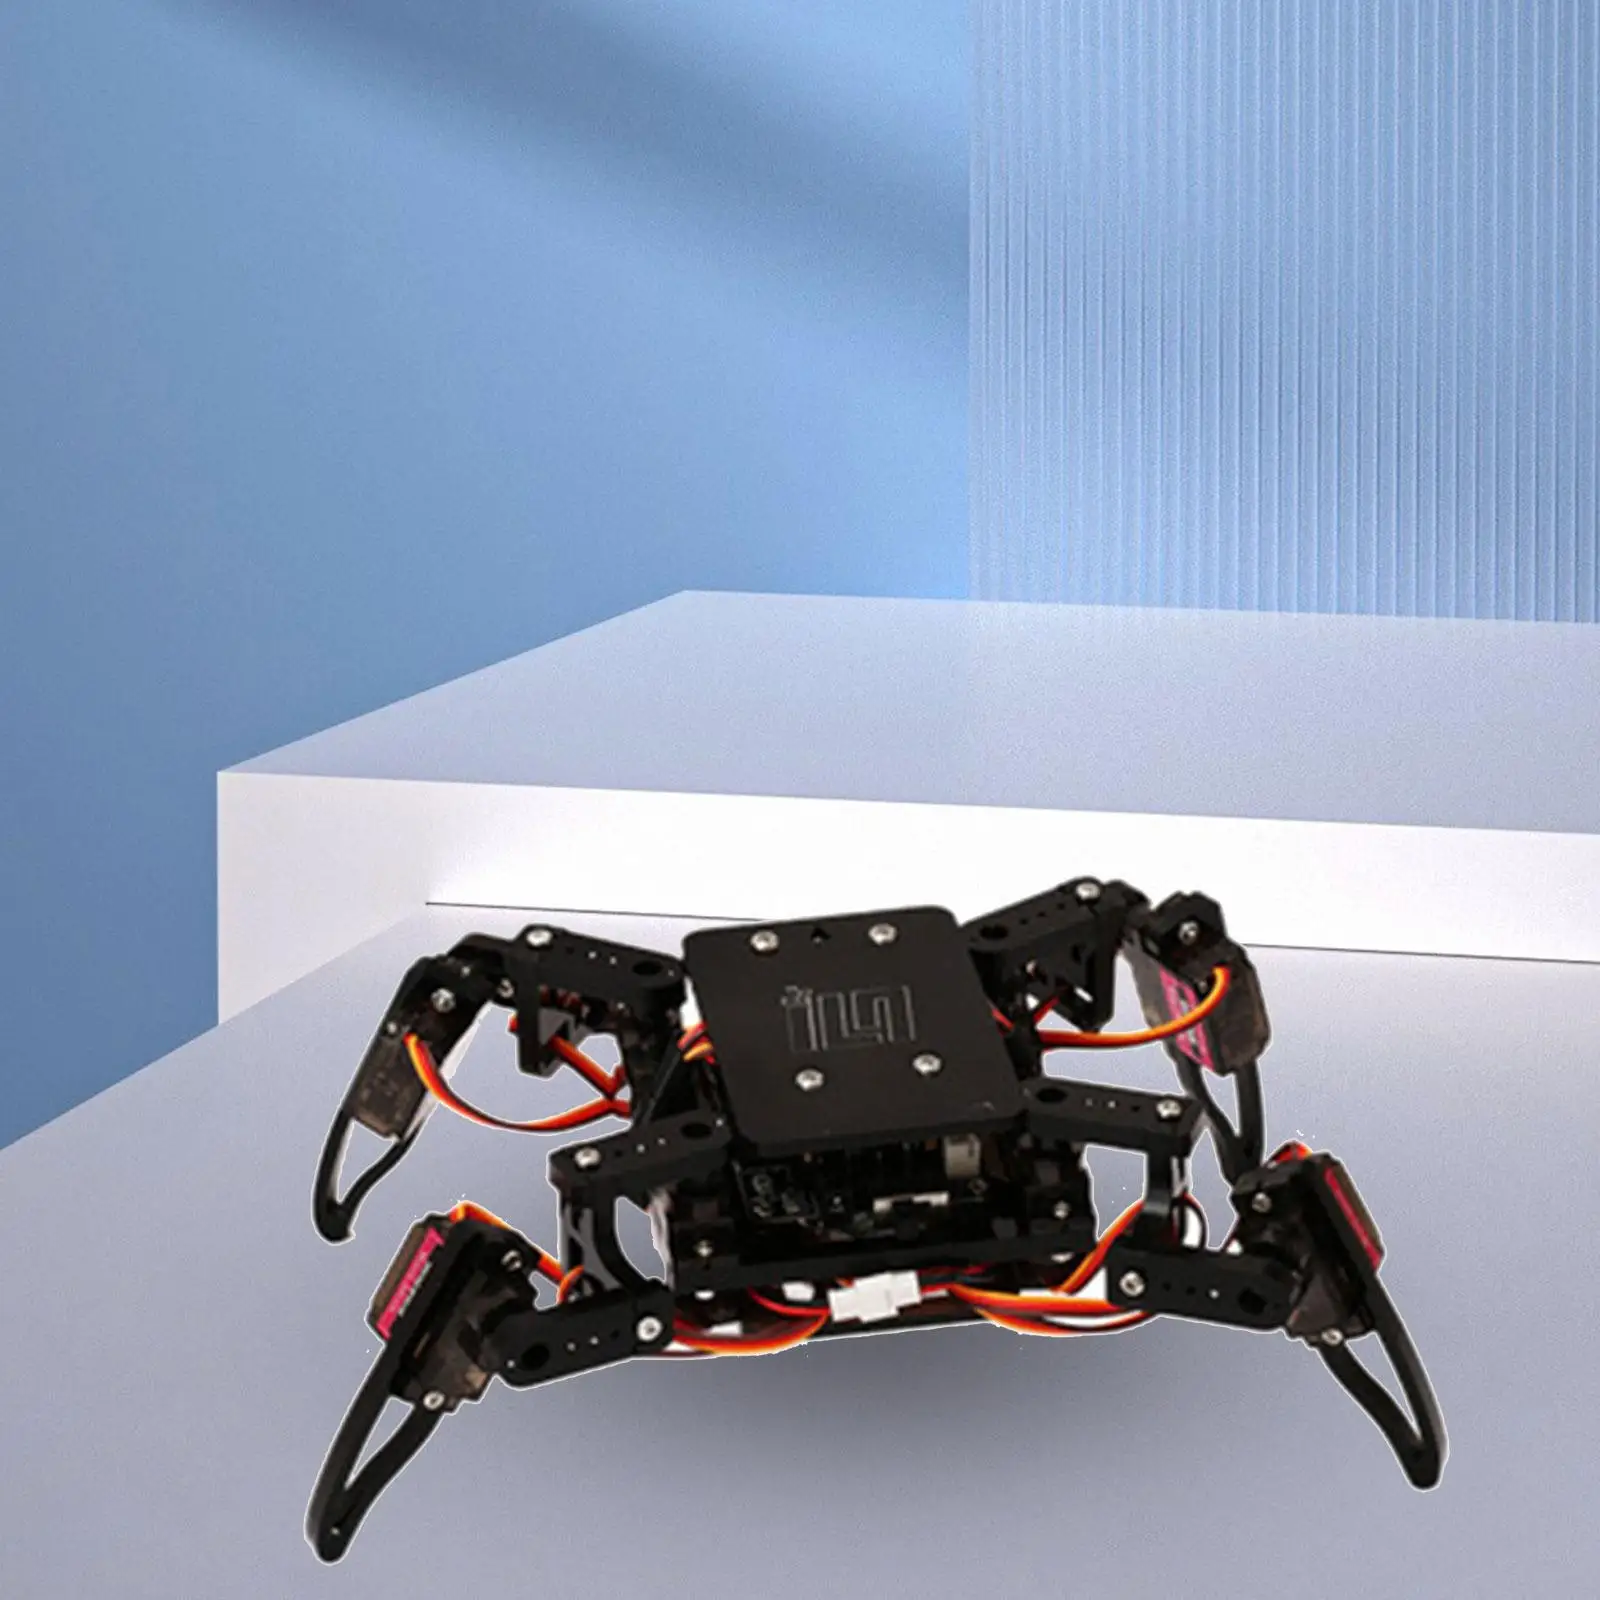 DIY Quadruped Robot Kits Compact Scientific Building Kits Programming Robot Toy